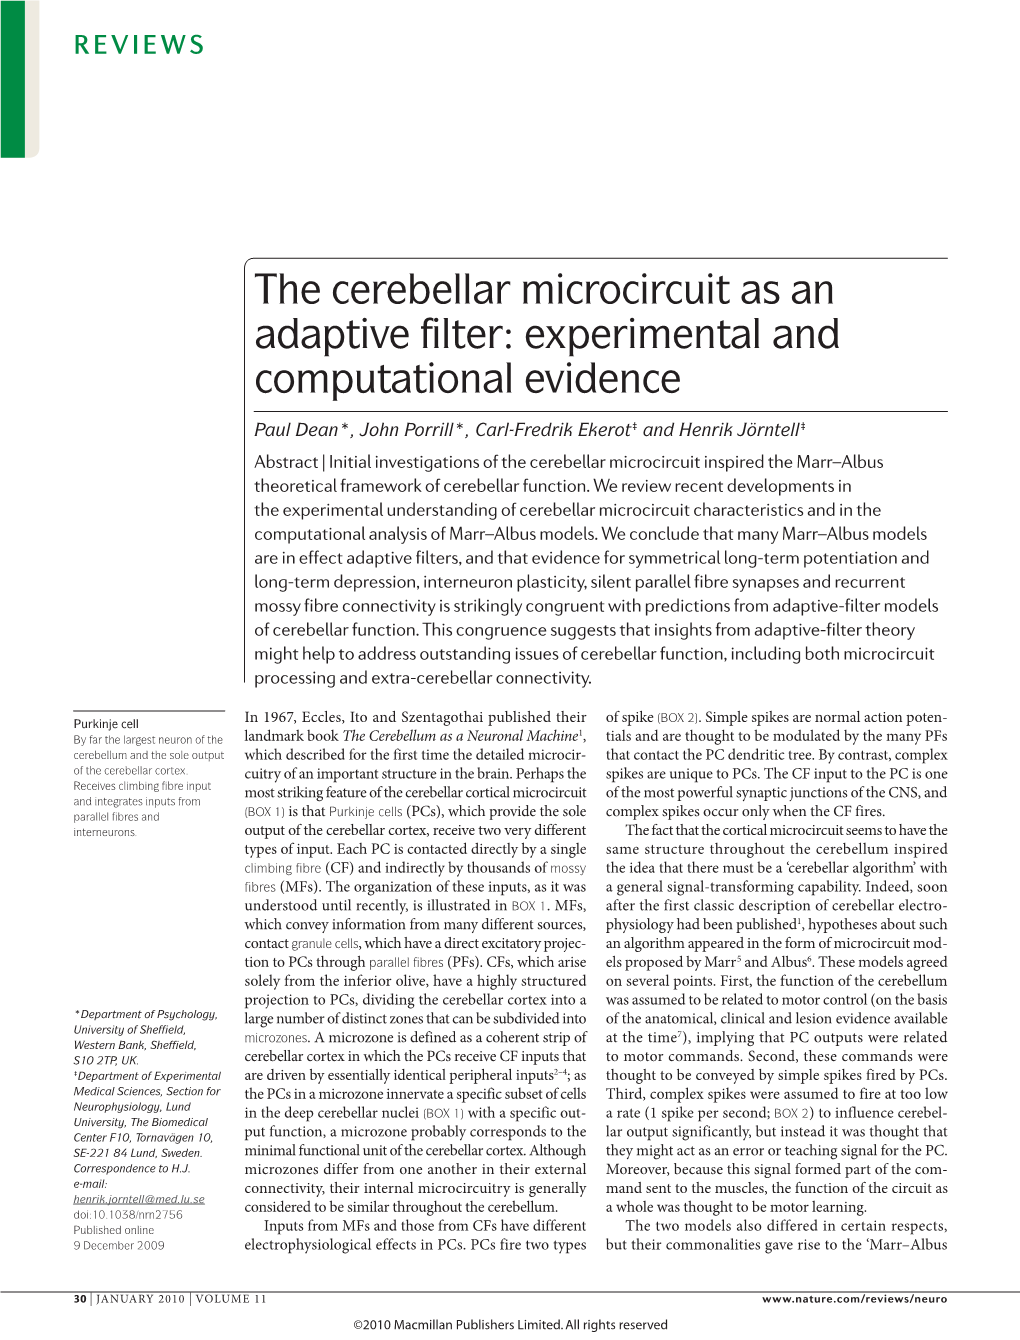 The Cerebellar Microcircuit As an Adaptive Filter: Experimental and Computational Evidence